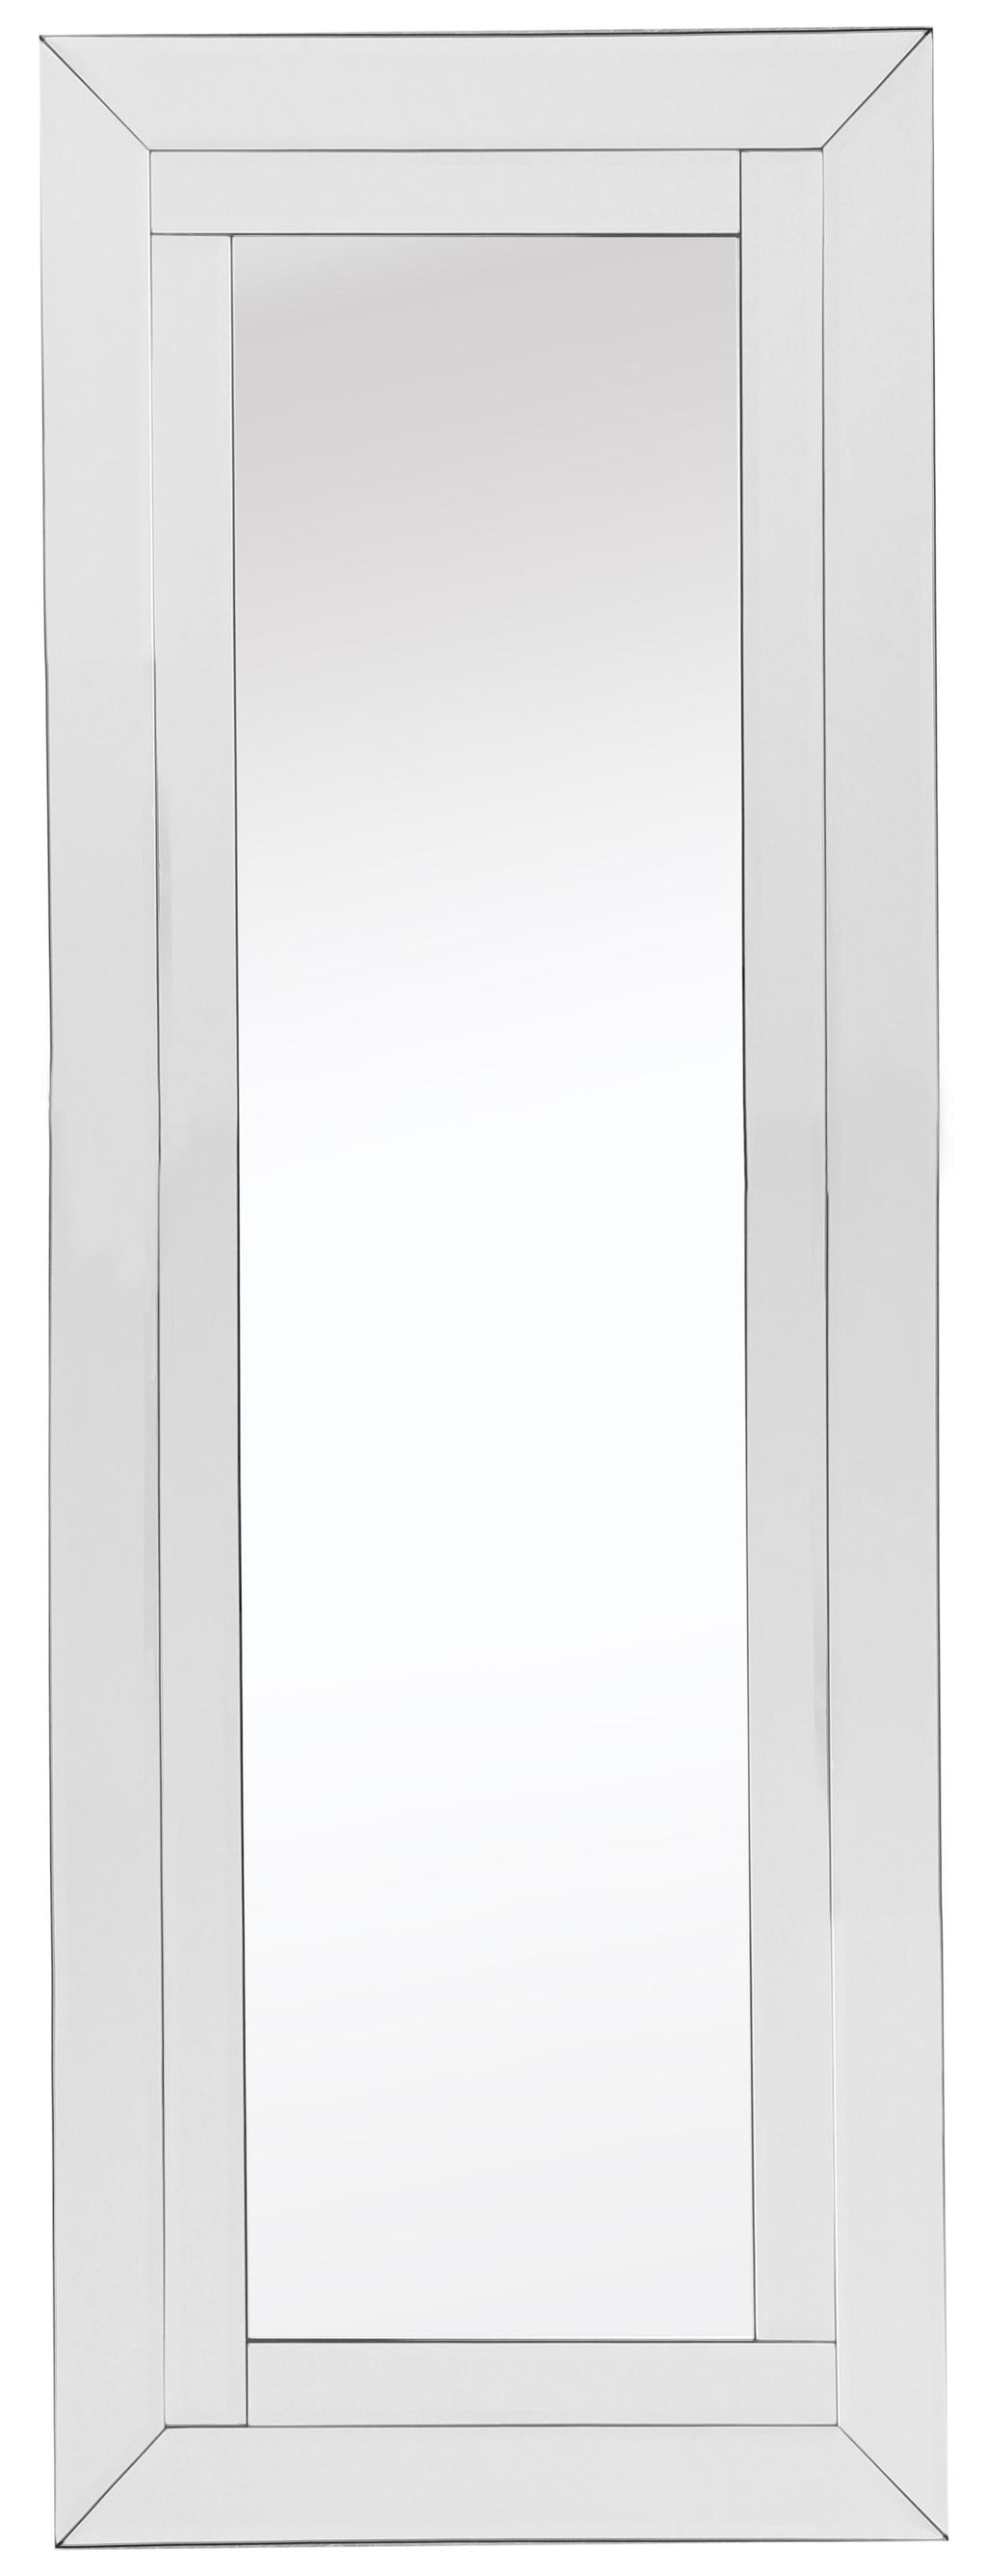 Silver Classic Full Length Mirror